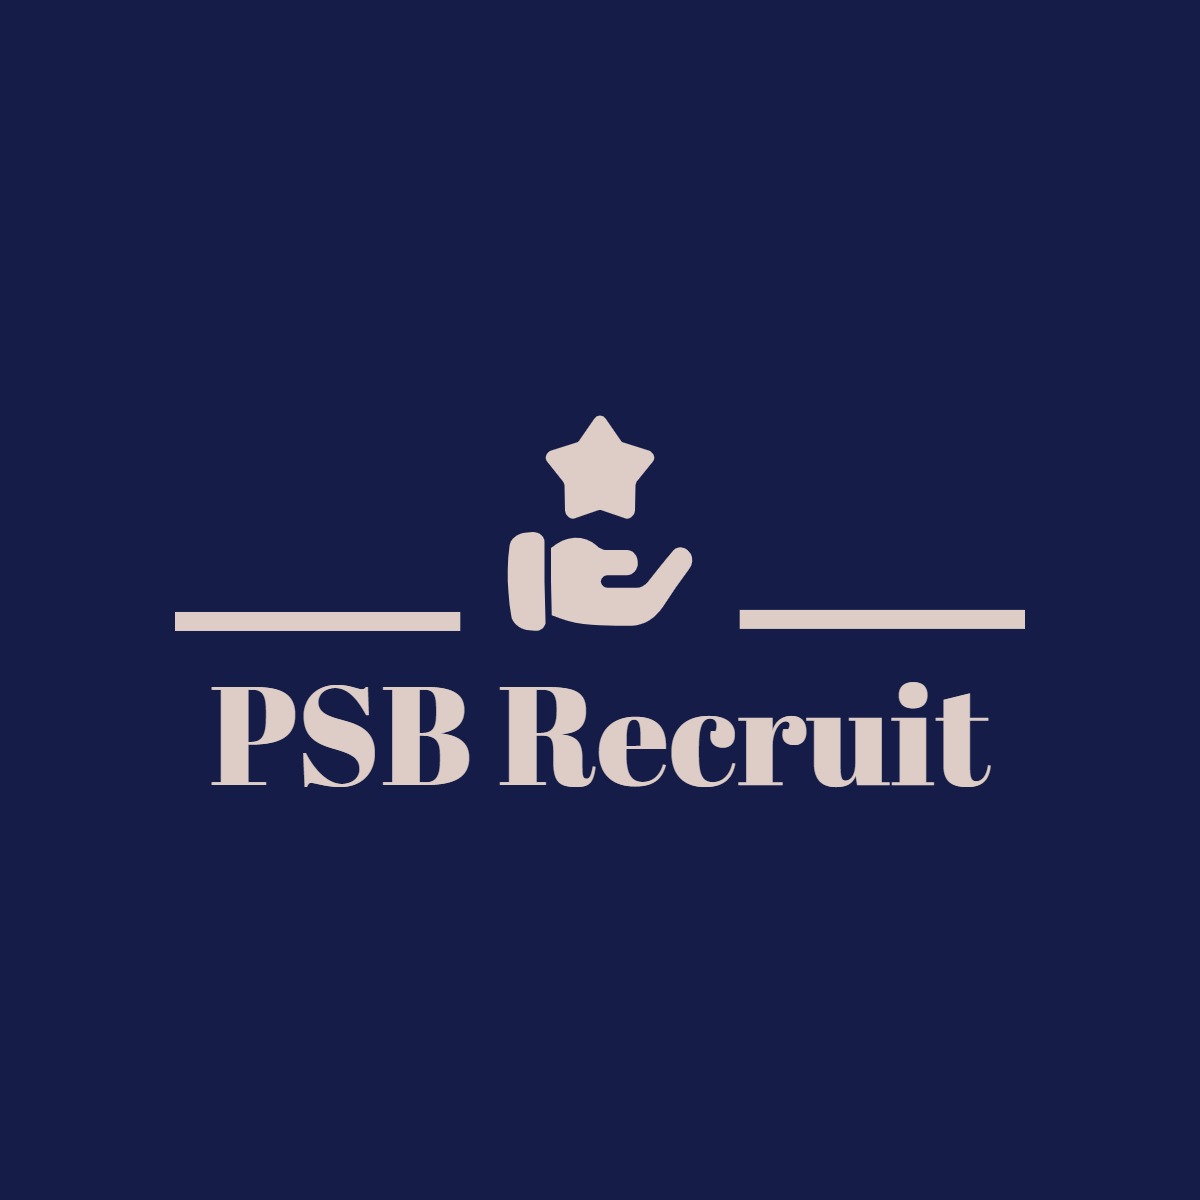 psb logo